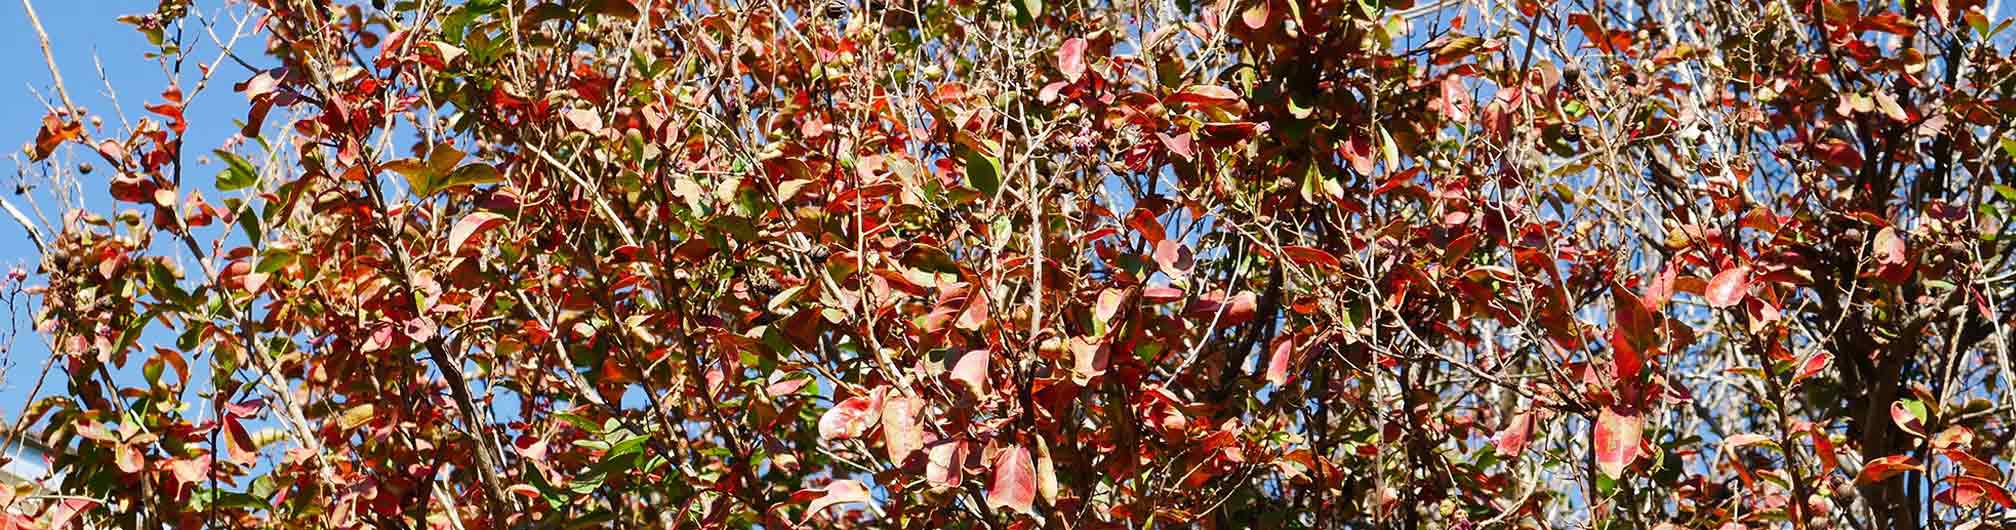 Crape myrtle showing autumn red